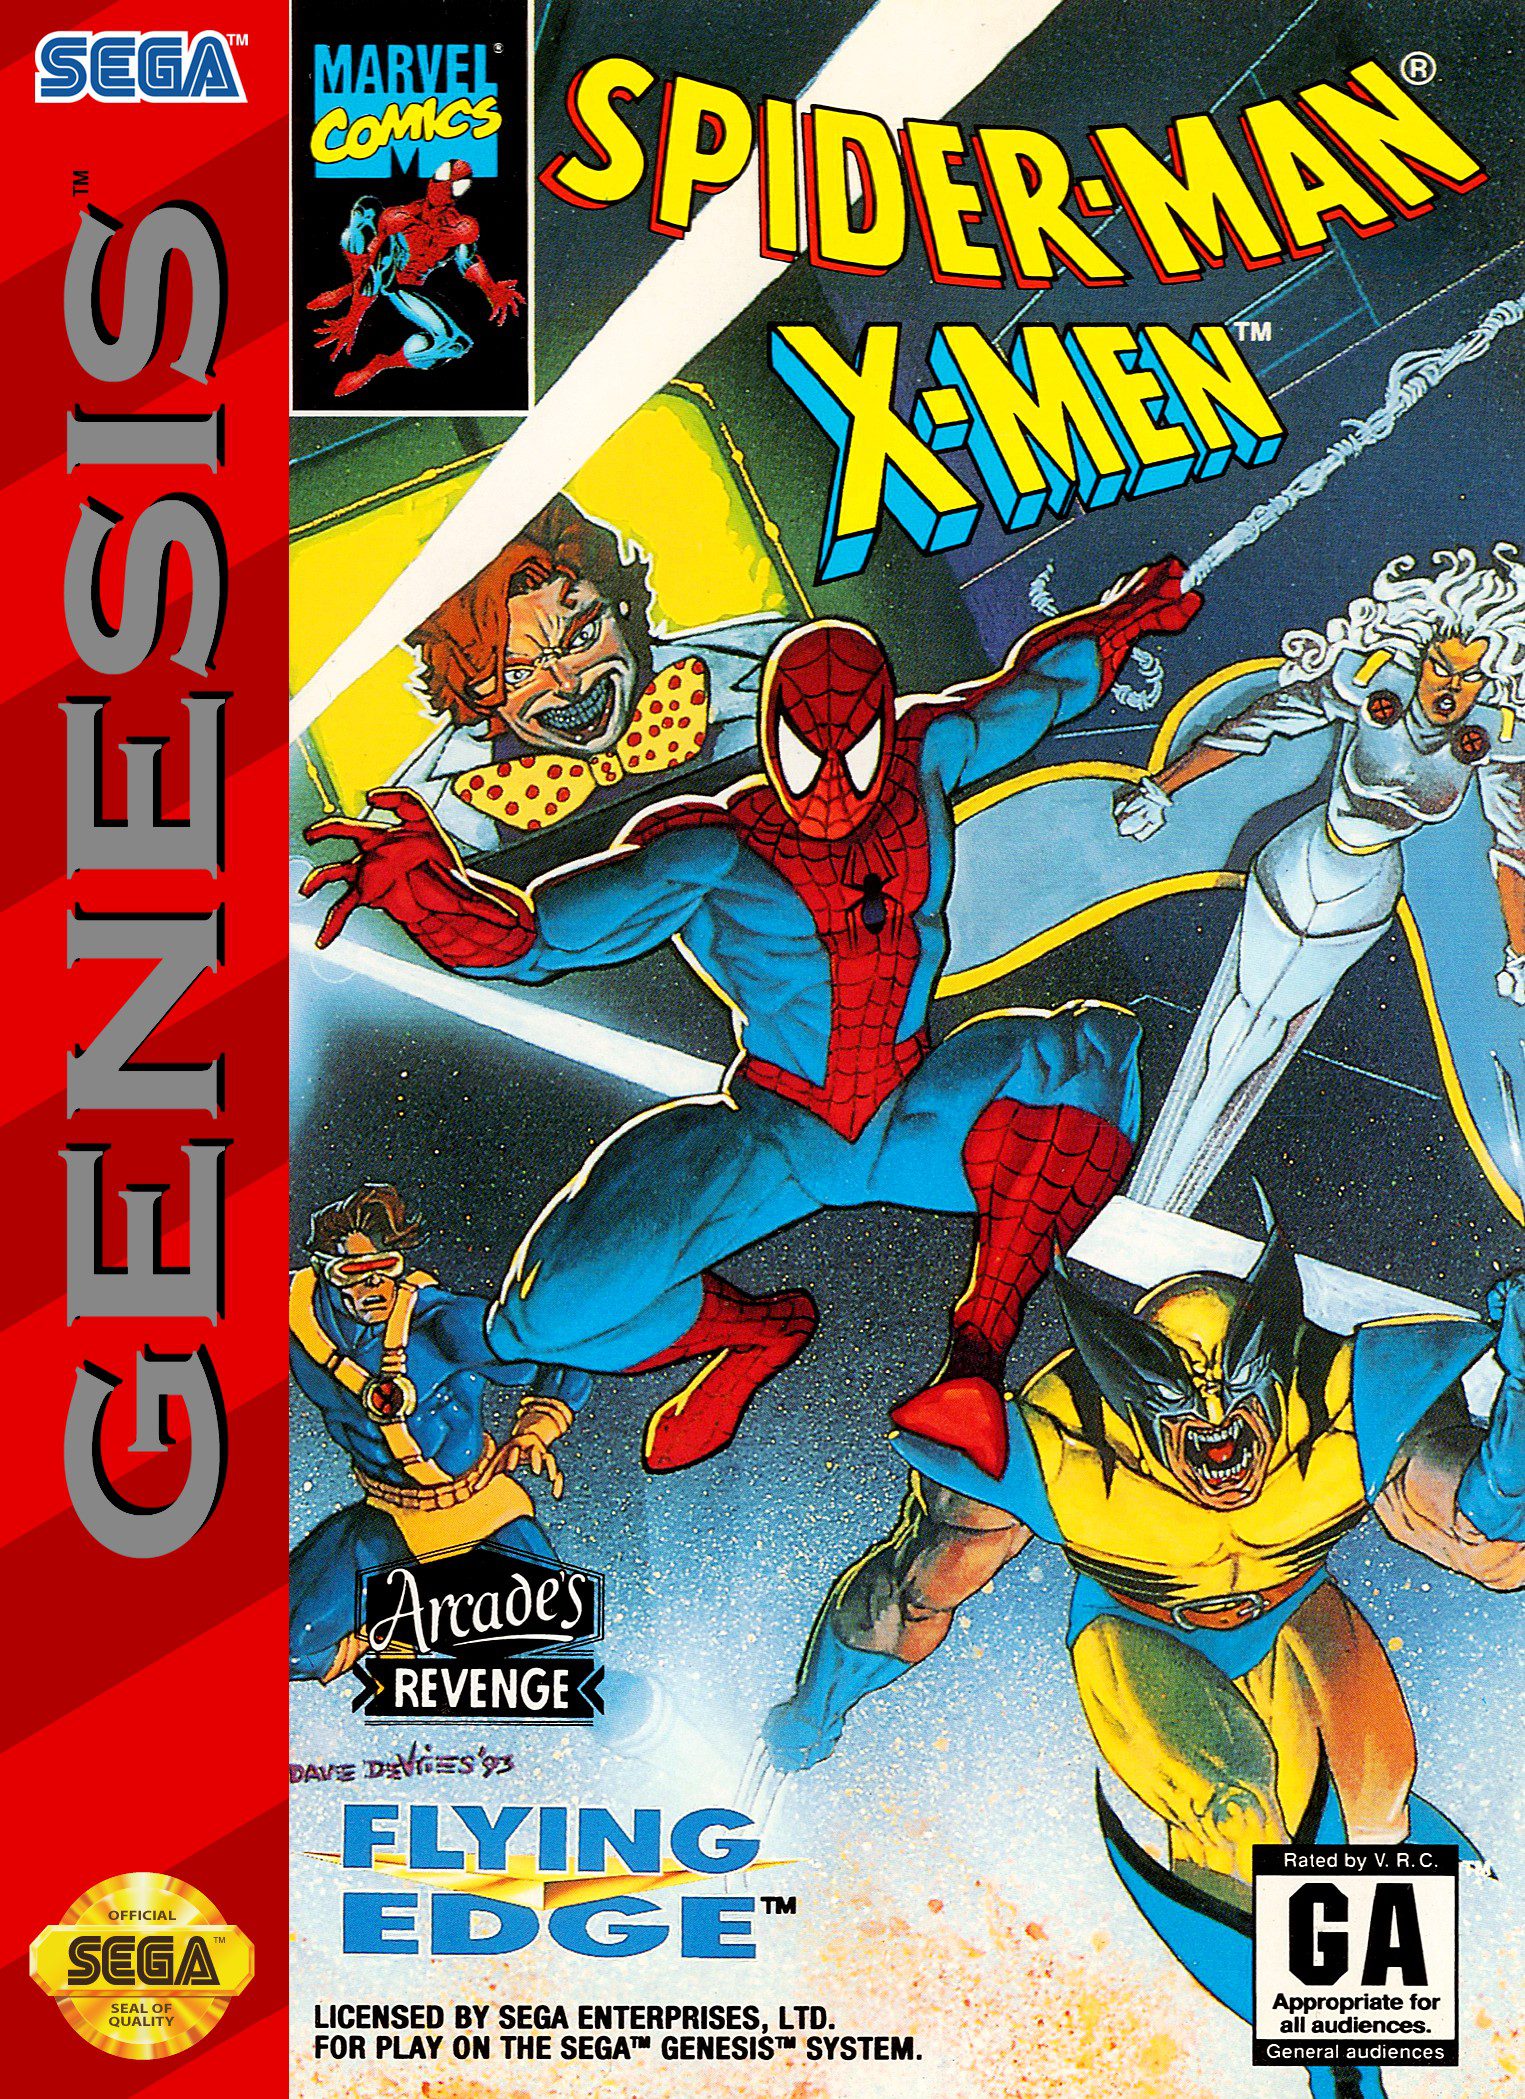 Spider-Man and the X-Men in Arcade's Revenge for Sega Genesis